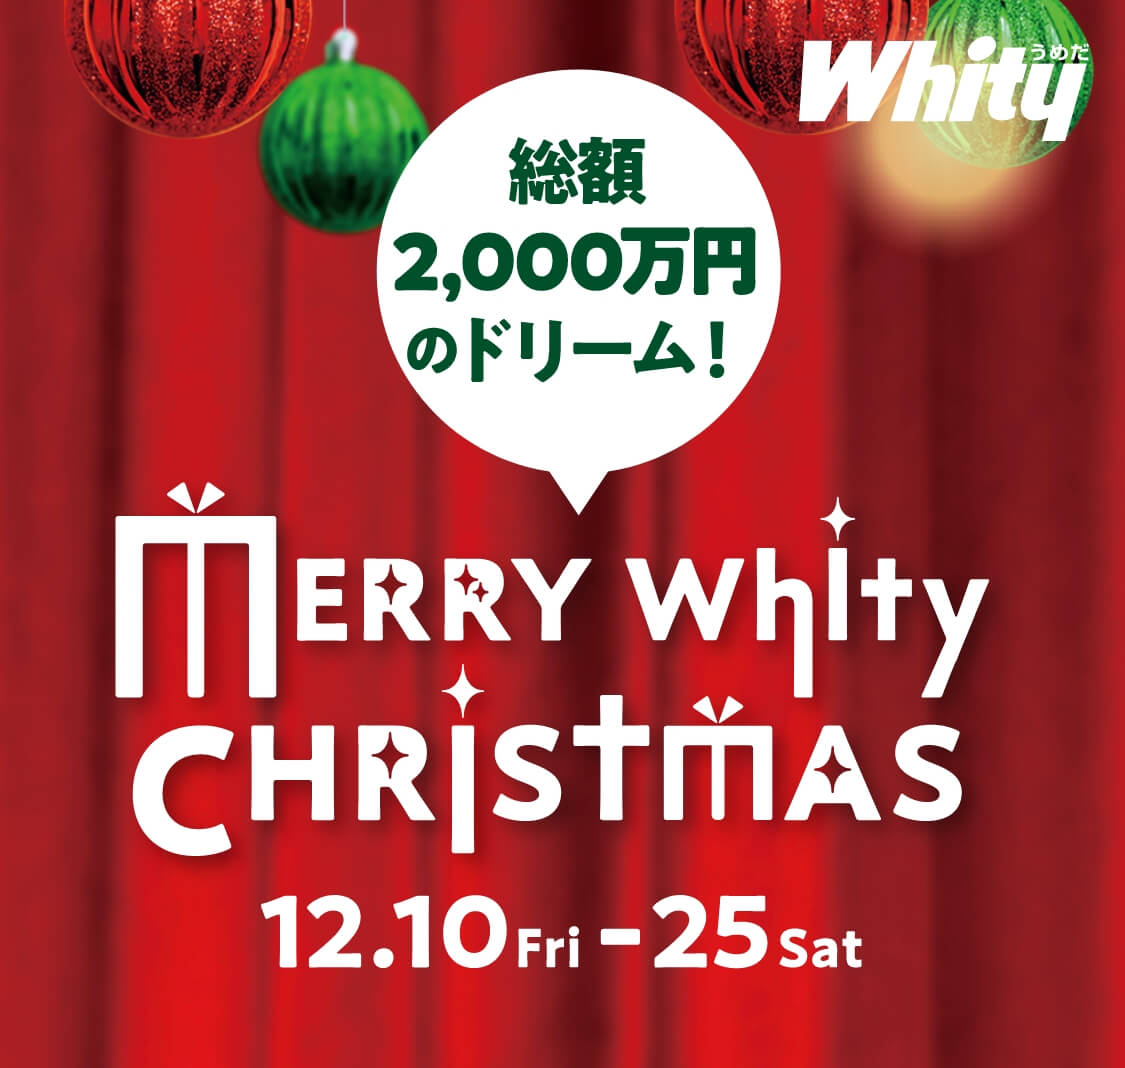 Whityうめだ　MERRY Whity CHRISTMAS 12.10 Fri-25 Sat　総額2,000万円のドリーム！